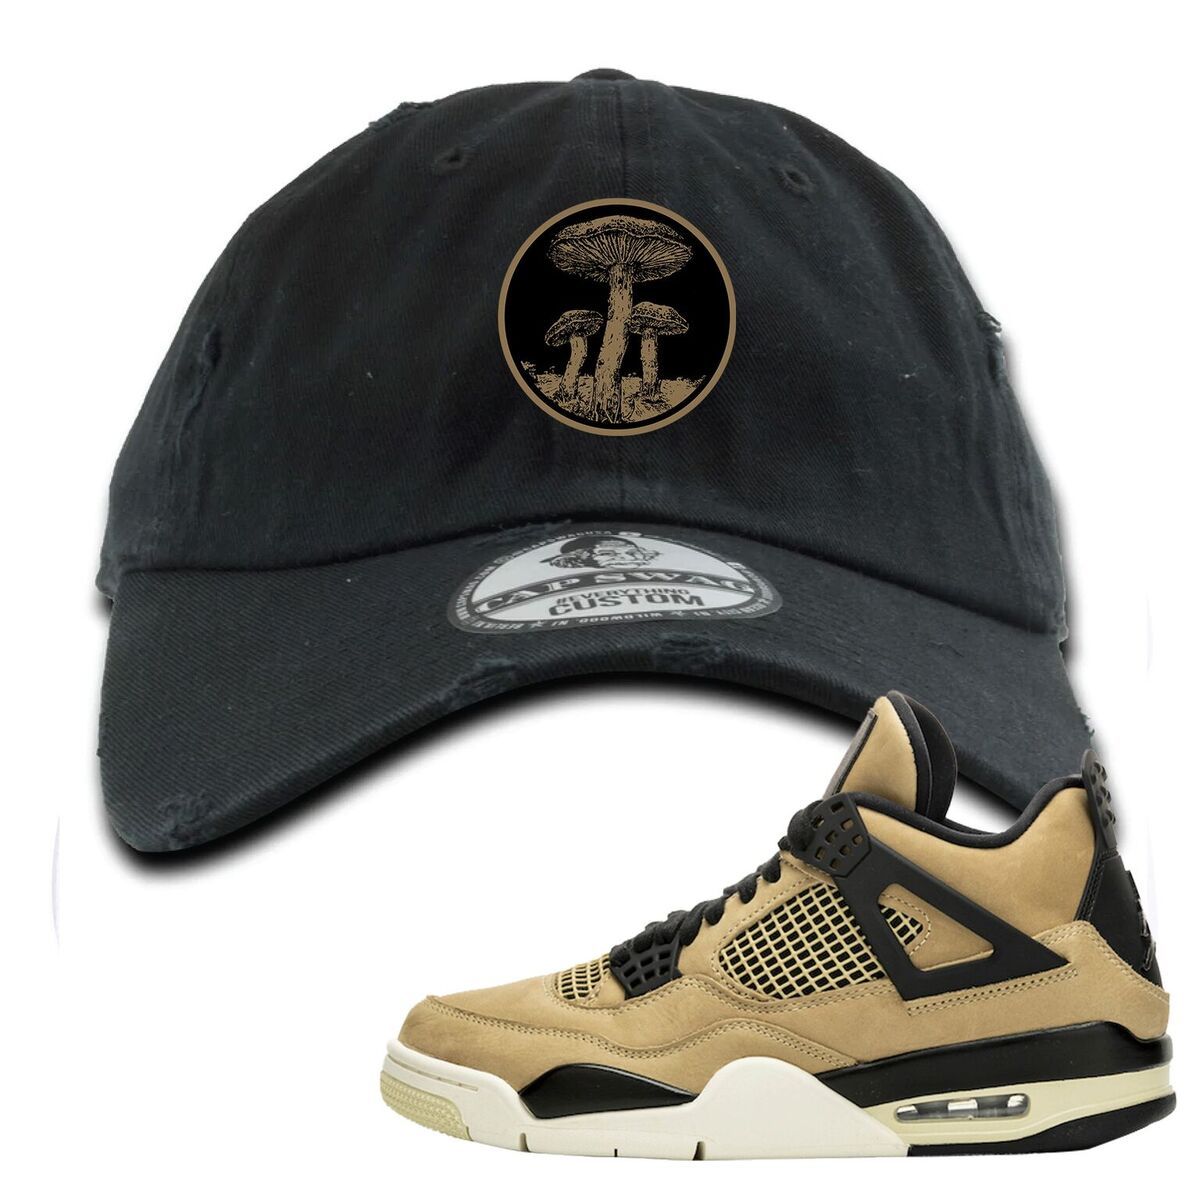 Jordan 4 WMNS Mushroom Sneaker Matching Black Mushroom Logo Distressed Dad Hat